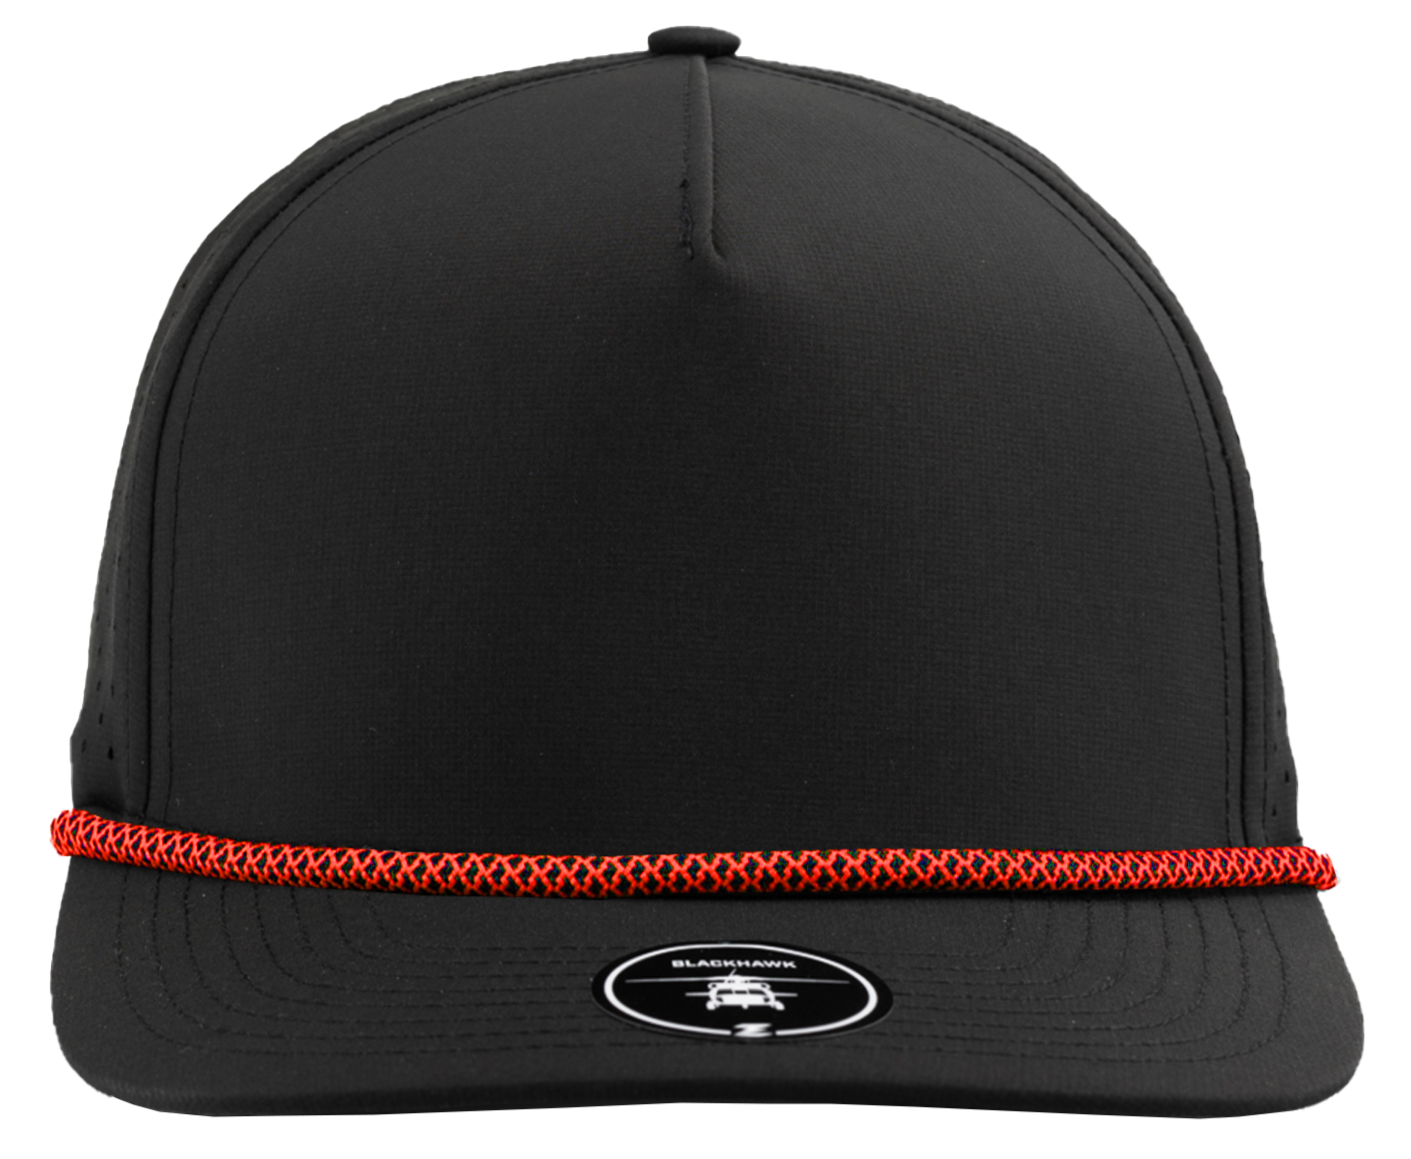 Custom Hat BLACKHAWK R+ (Rope Brim)-Water Repellent hat-Zapped Headwear-Black/ Red Chainlink Rope-Zapped Headwear-5 panel - rope hat - golf hat